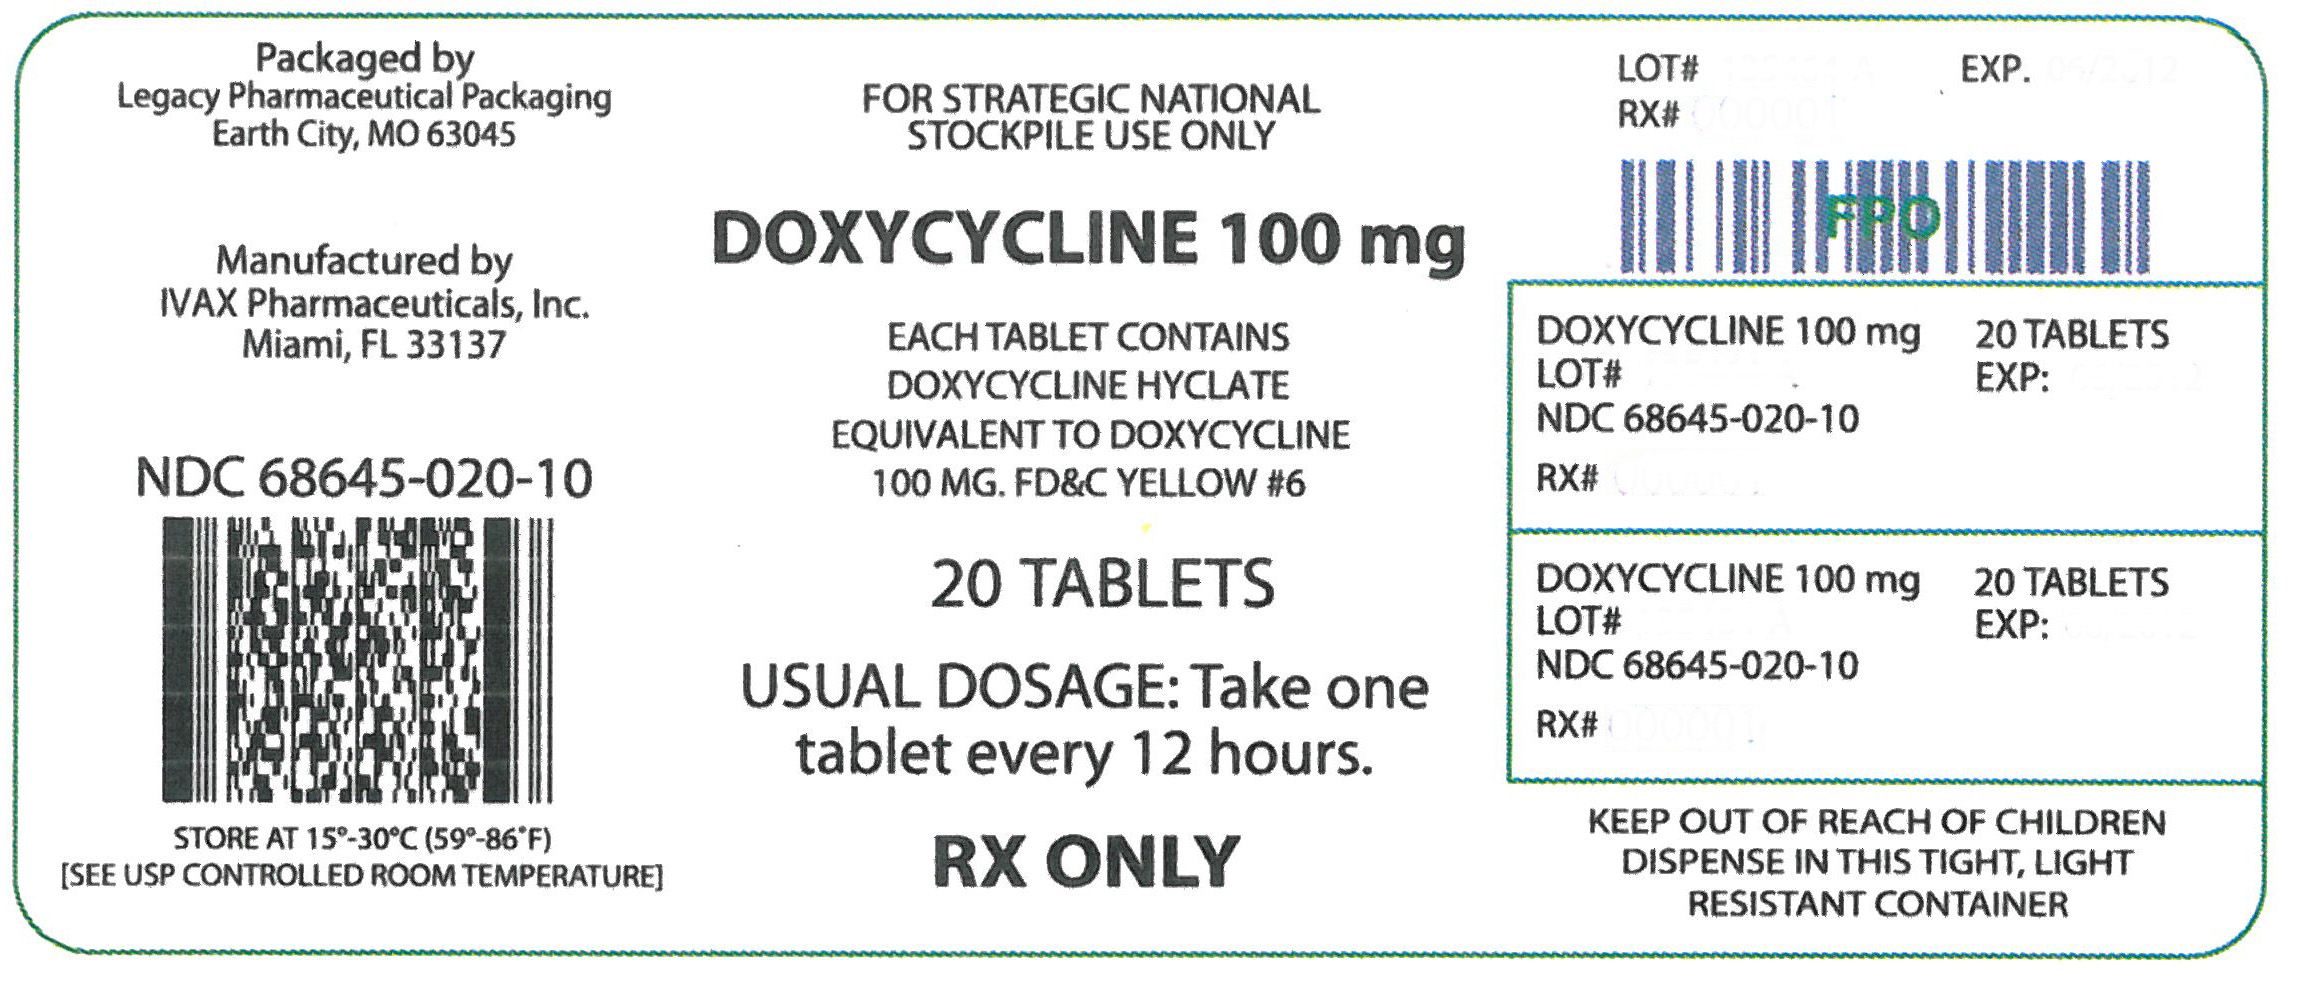 NDC 68645-020-10

Doxycycline 100mg

Rx Only

20 tablets

